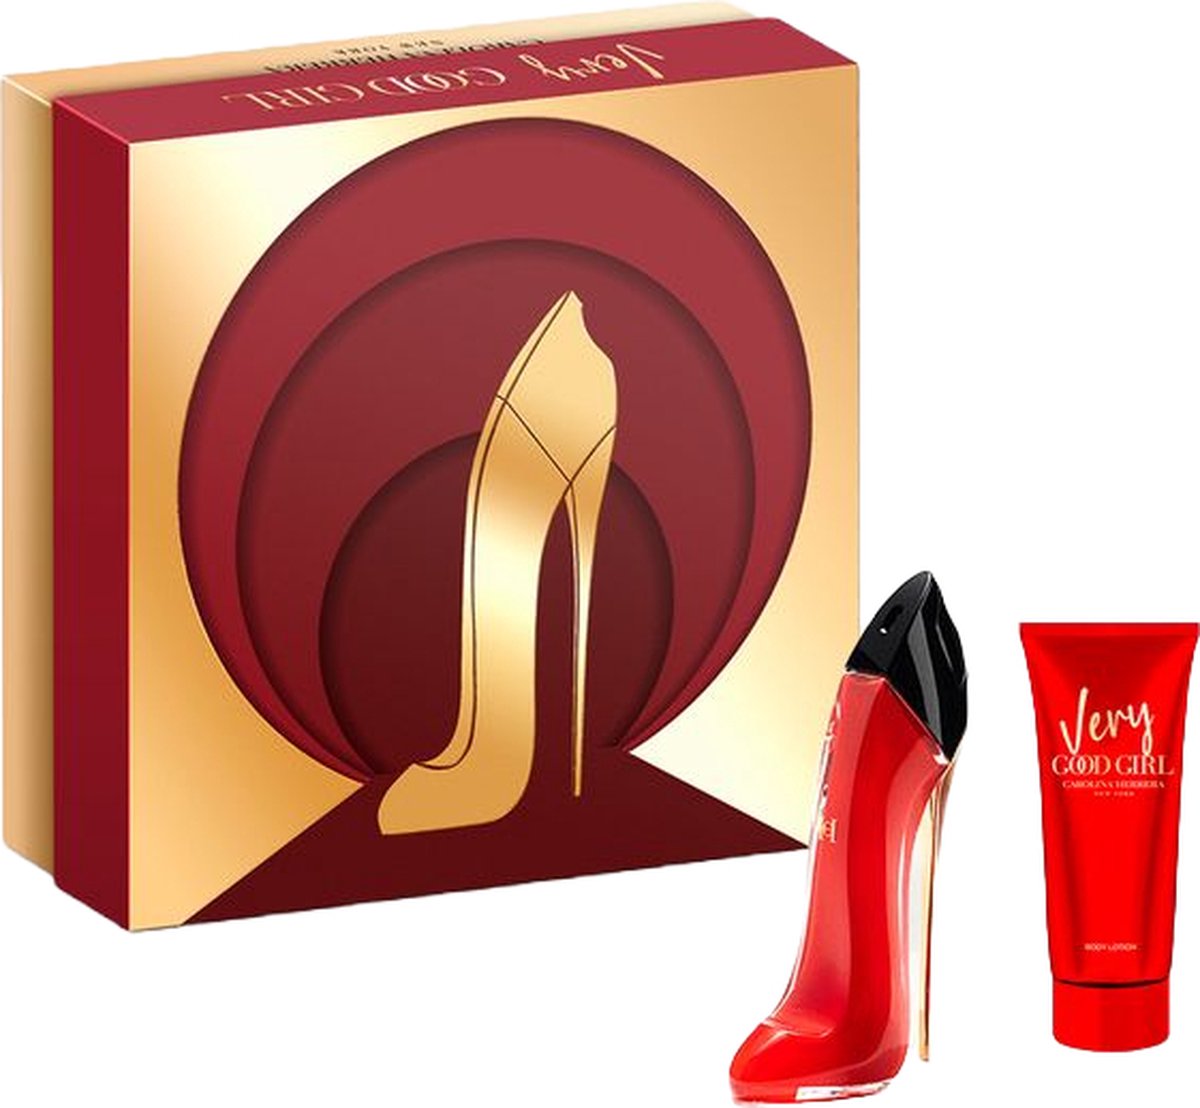 Carolina Herrera Very Good Girl Giftset - 50 ml eau de parfum spray + 100 ml bodylotion - cadeauset voor dames